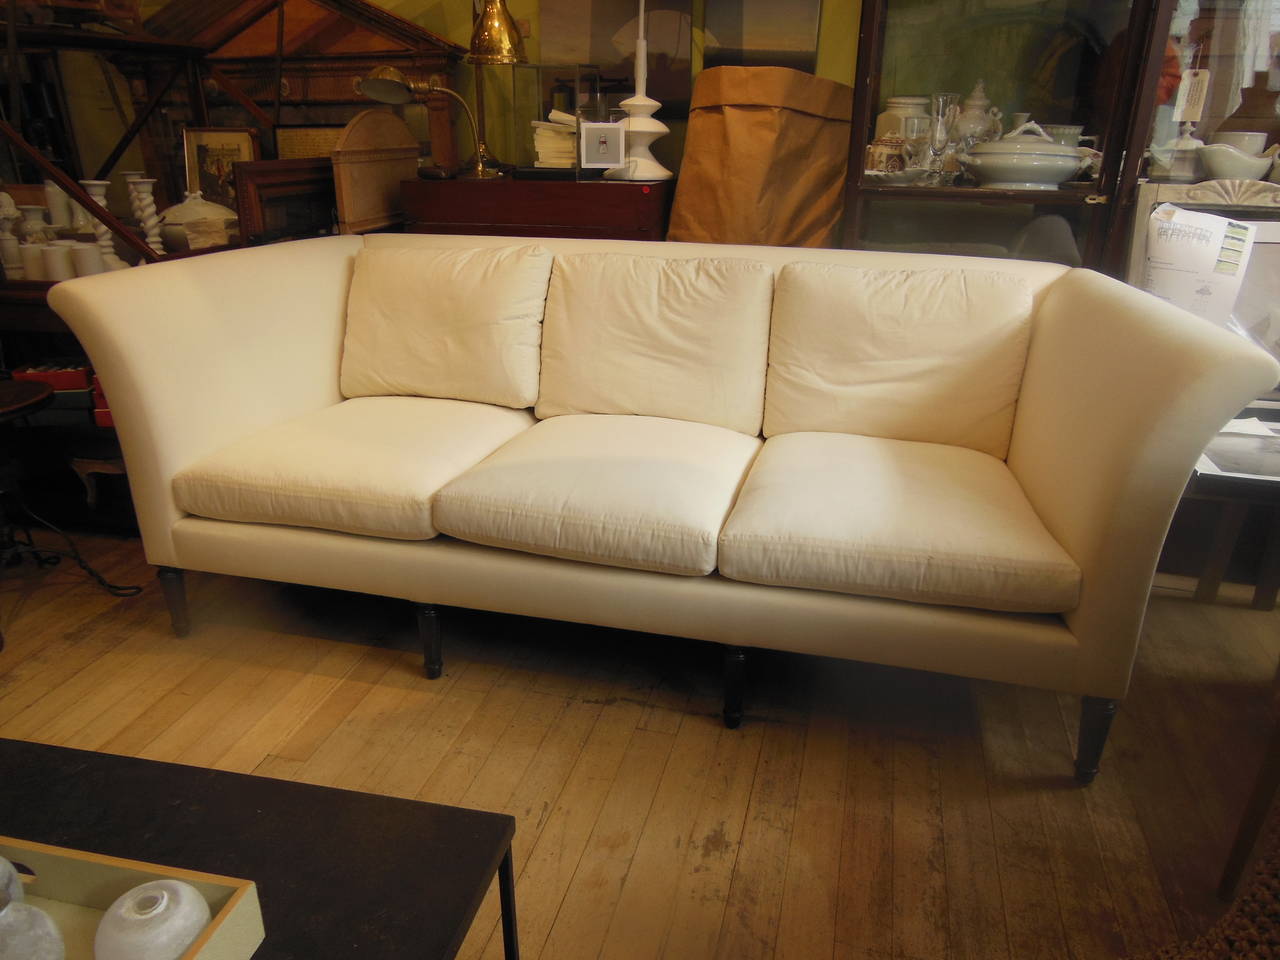 Elegant vintage sofa totally redone in muslin on fluted legs.